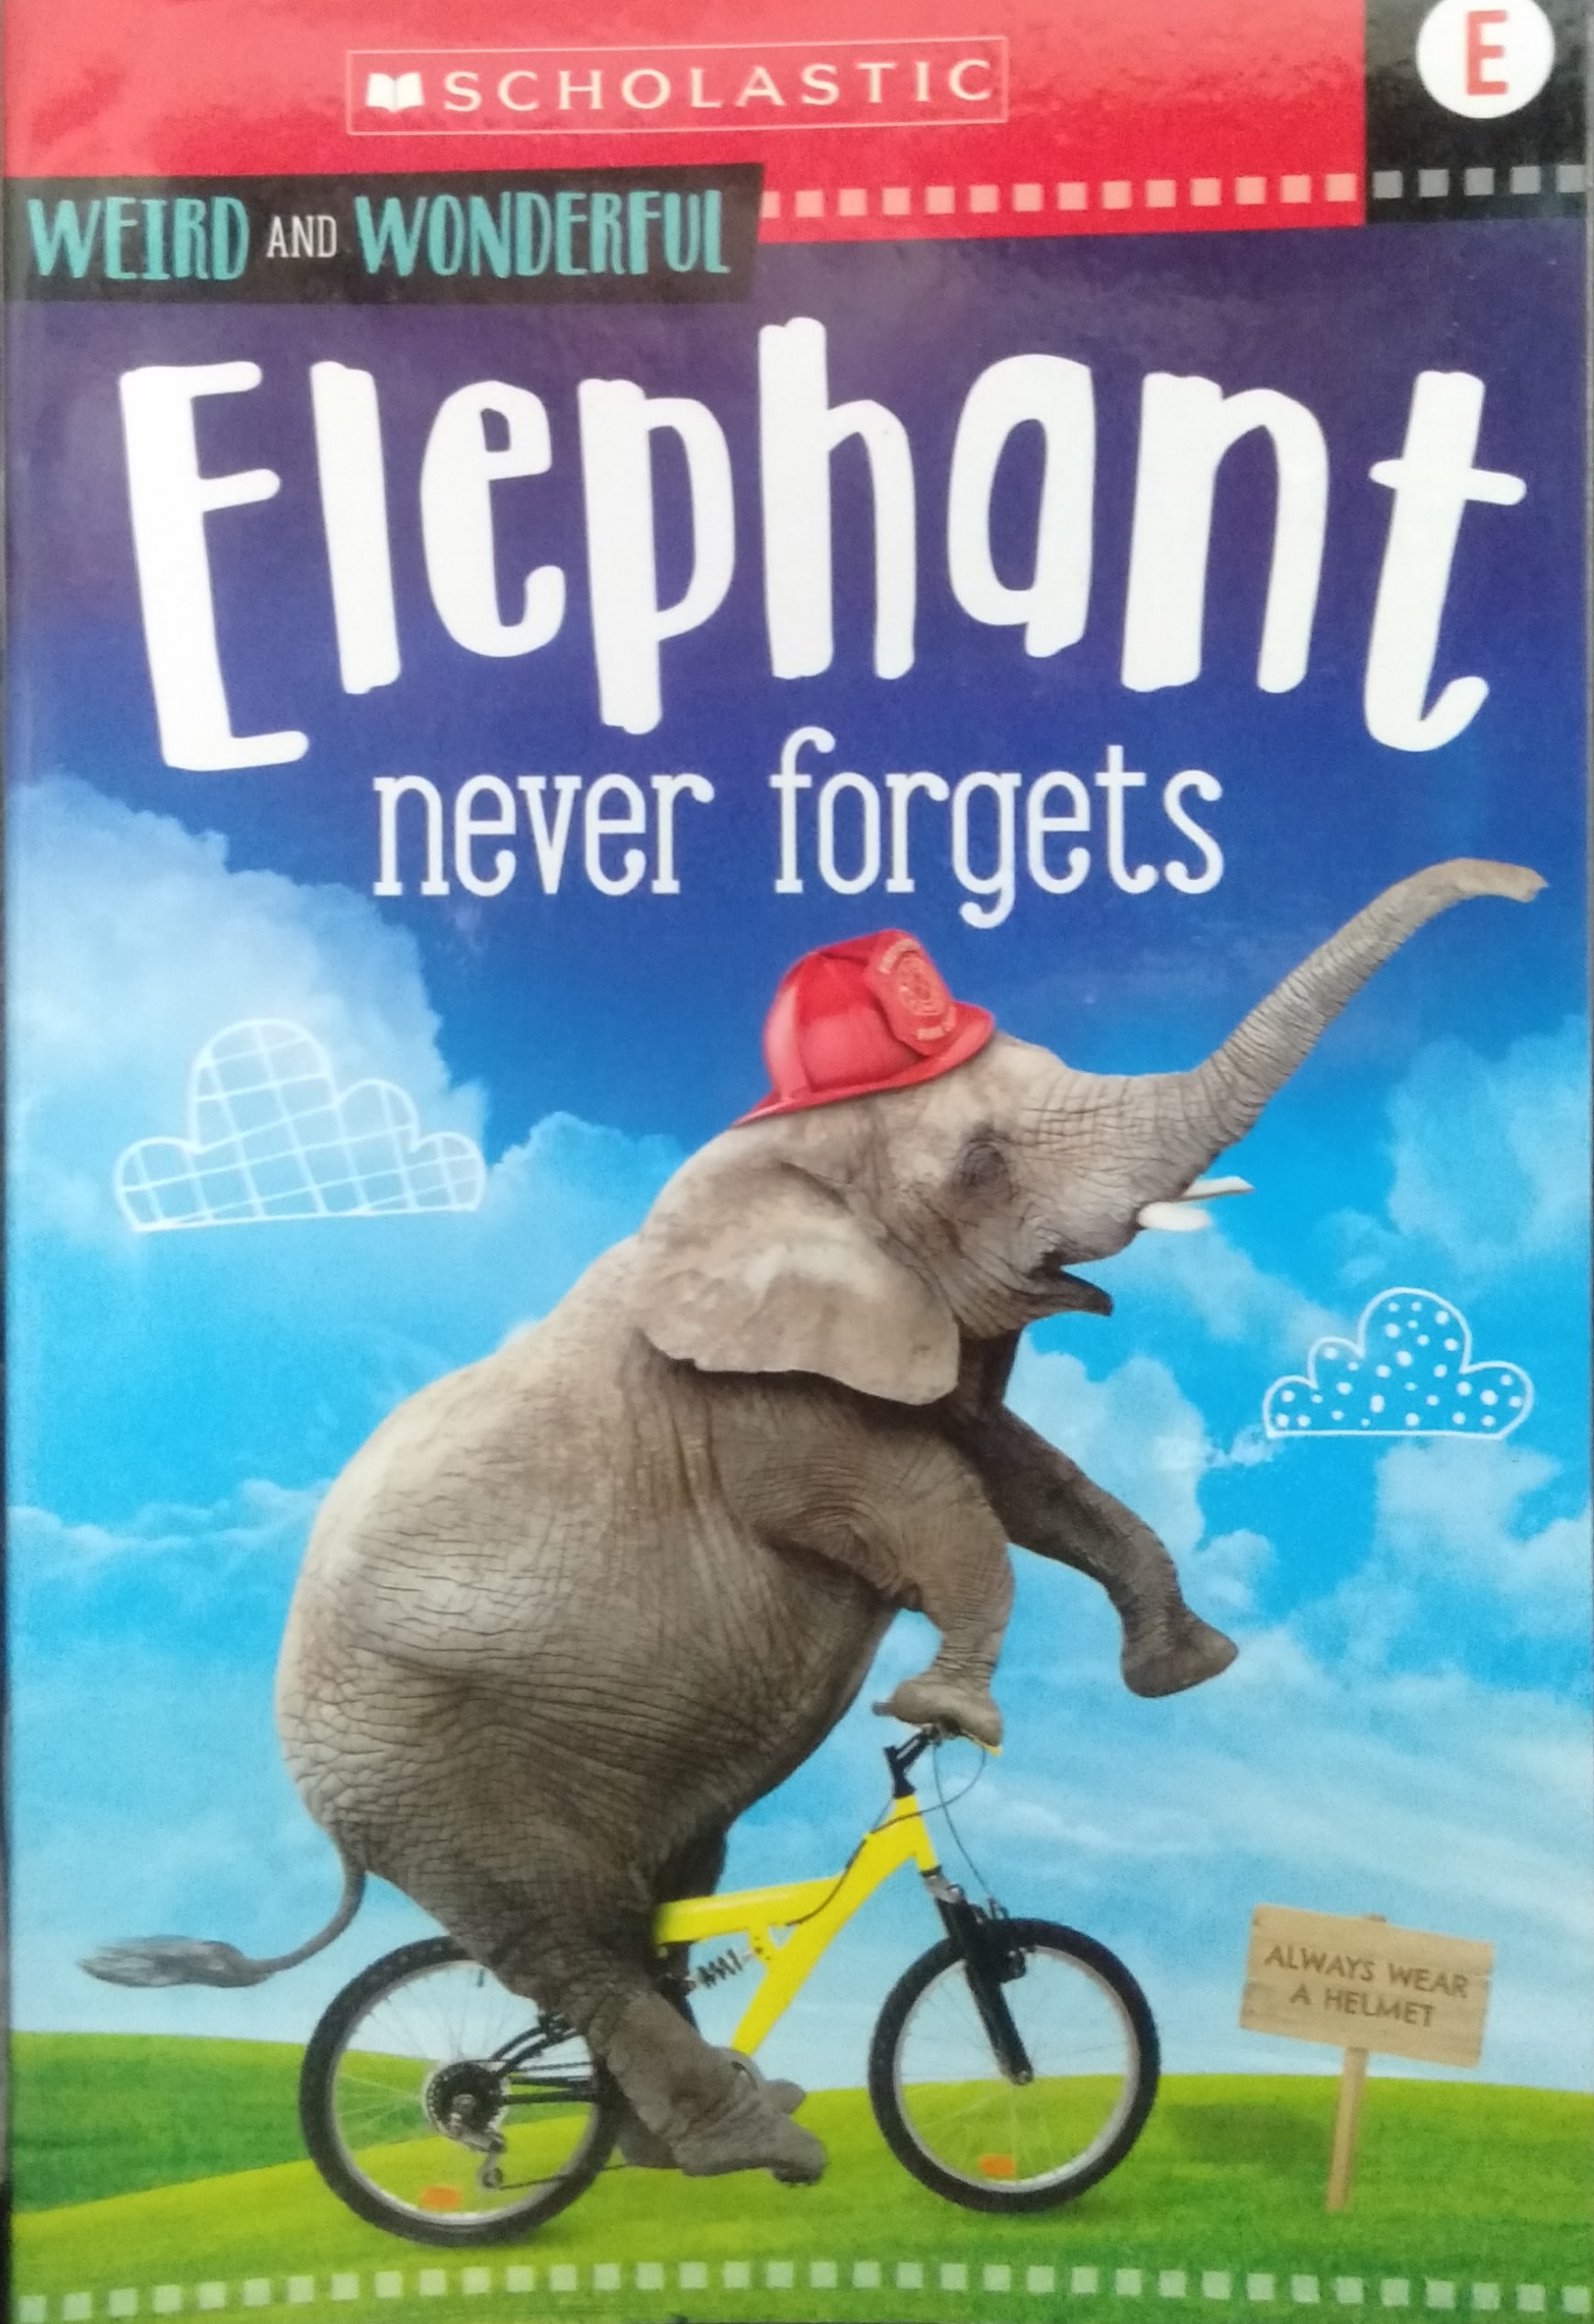 IMG : Animal Antics Weird and Wonderful Elephant never forgets